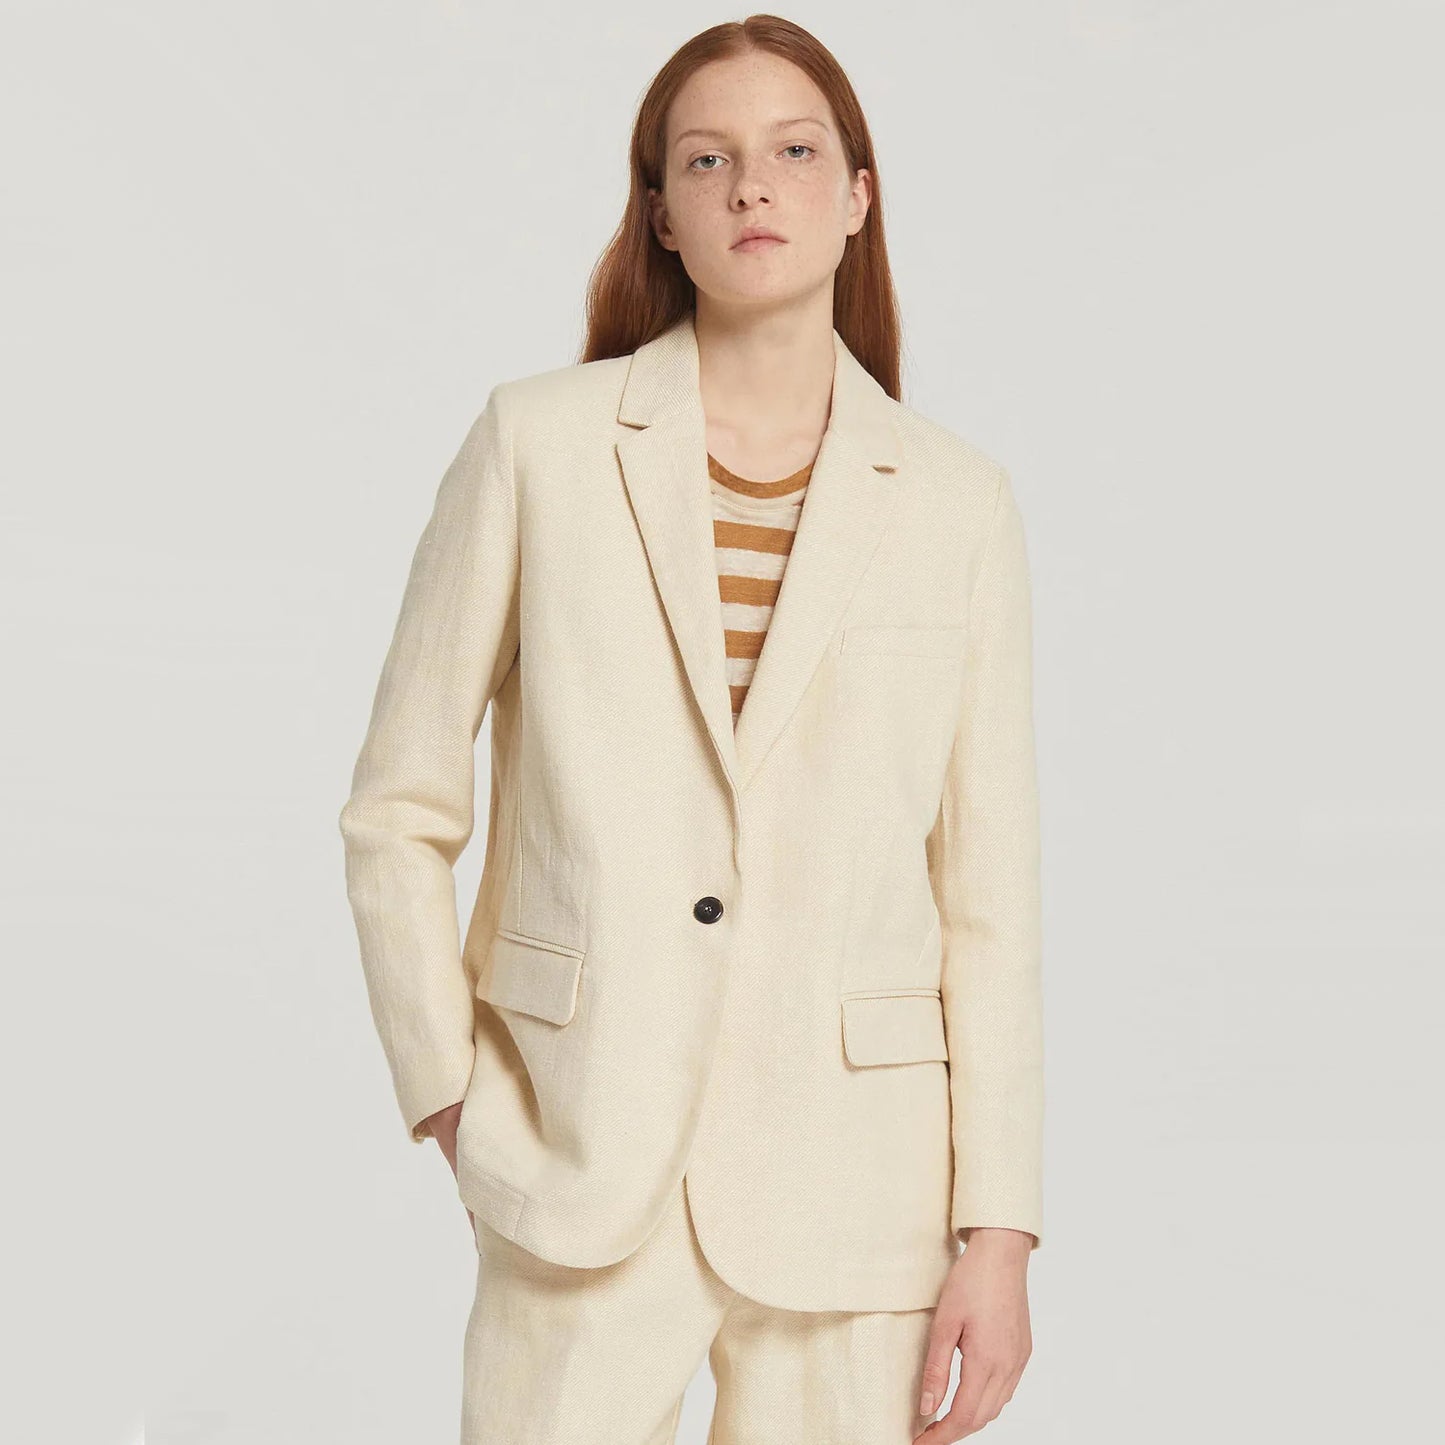 Pomandere Cream Linen Jacket, size 36 (fits like a size 0/2)